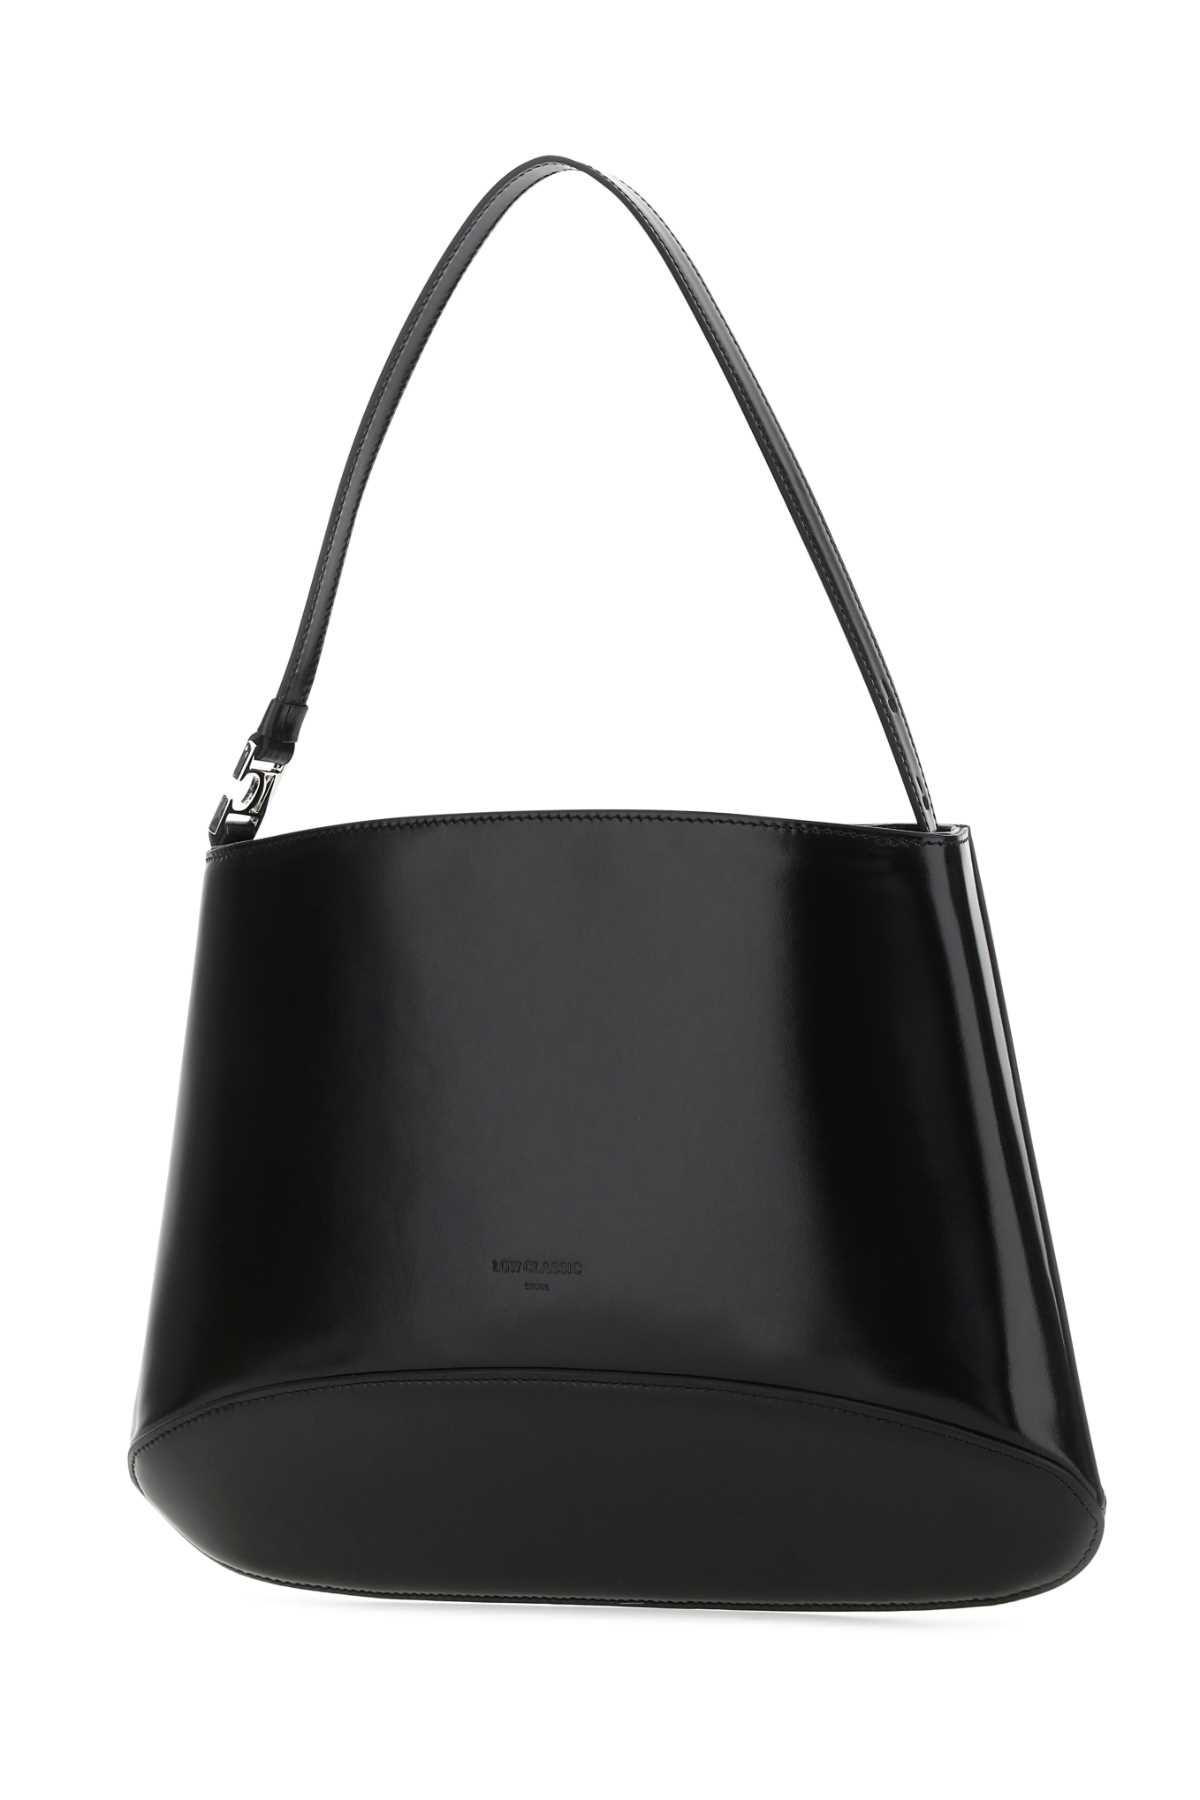 Low Classic Black Leather Handbag In 0372